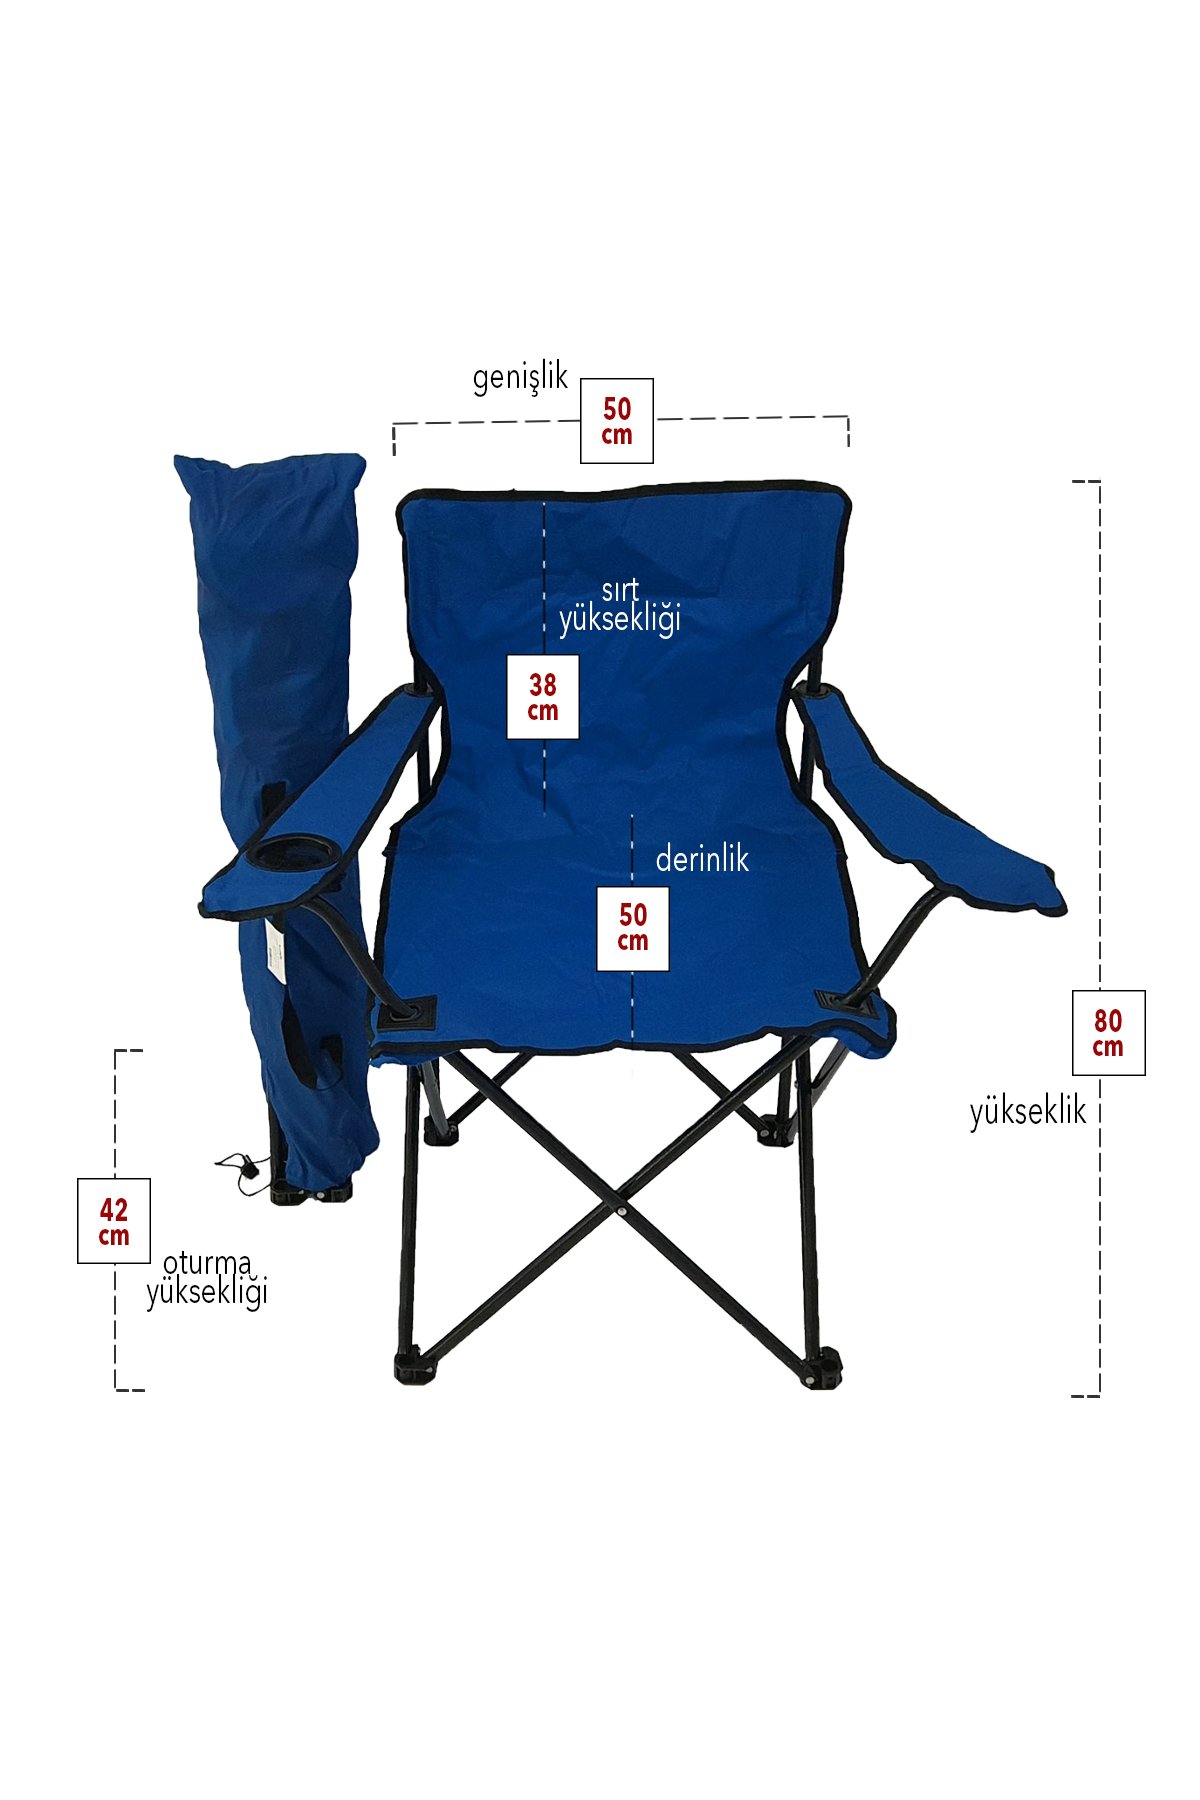 Bofigo 2-pack Camping Chair Picnic Chair Folding Chair Camping Chair with Carrying Bag Blue